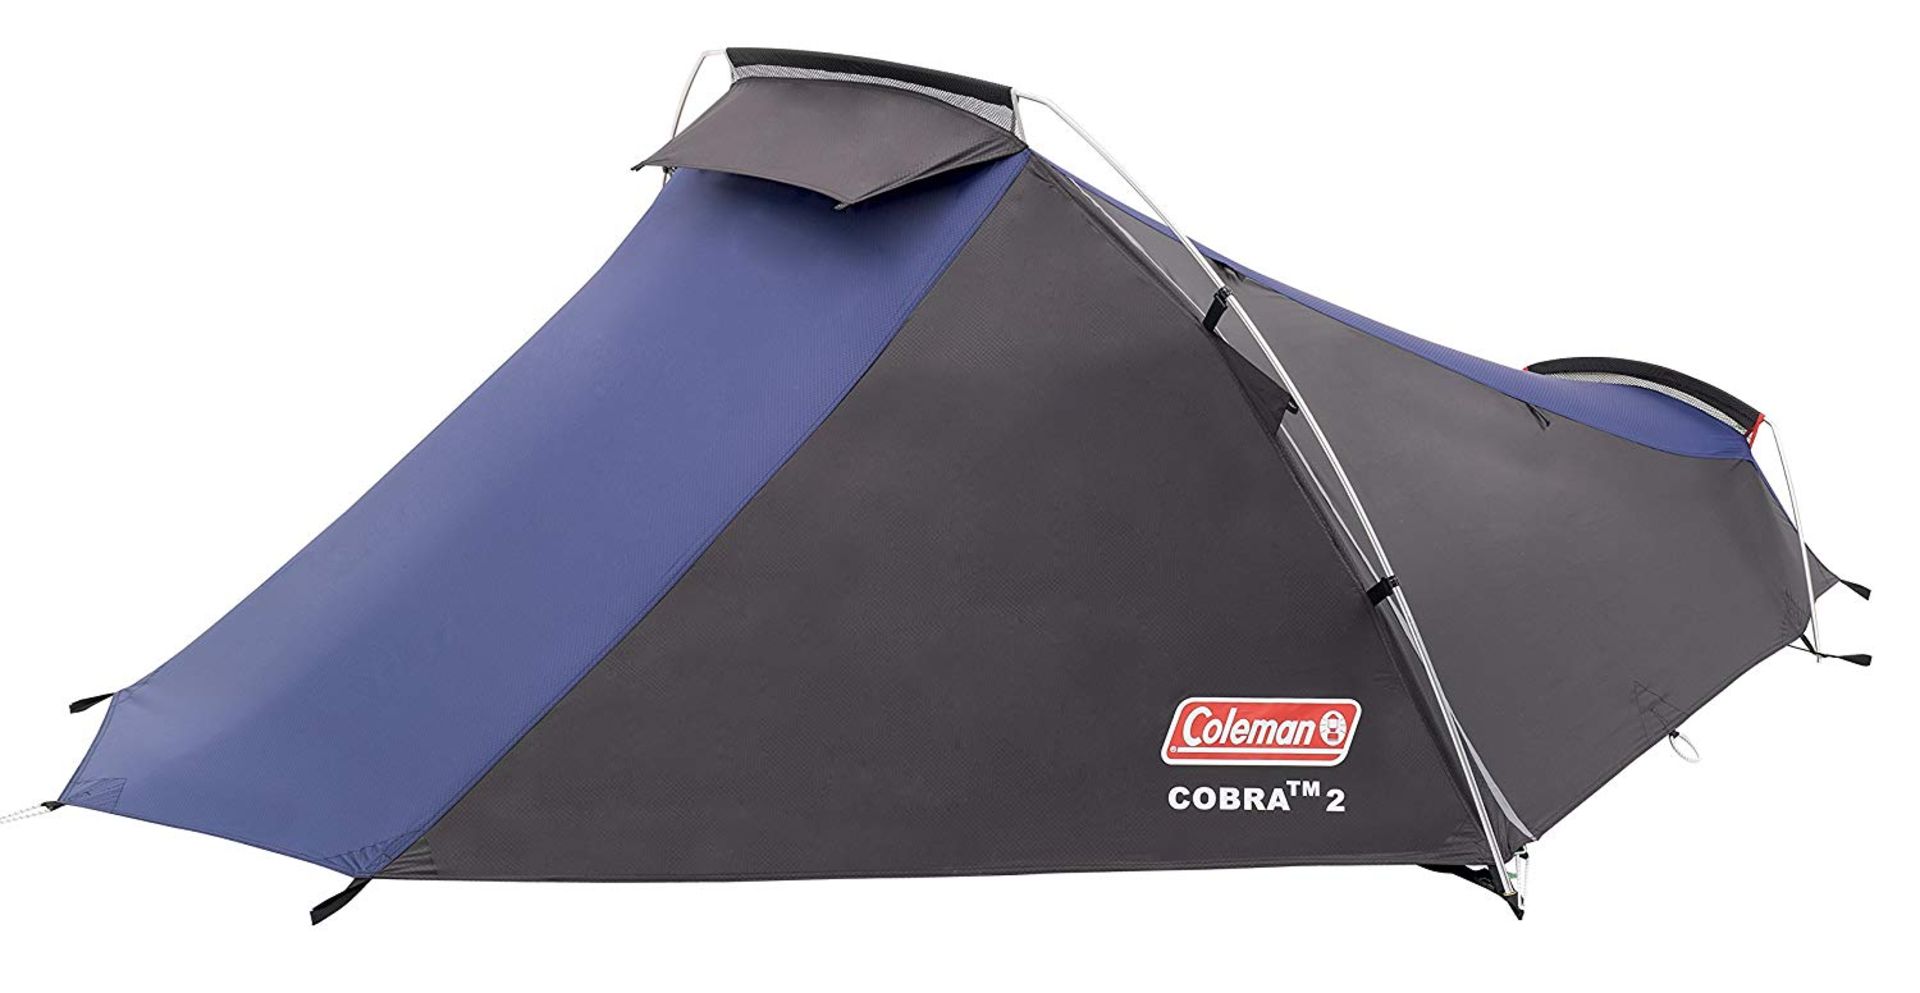 Coleman Lightweight Cobra 2 Backpacking Tent RRP £119.99